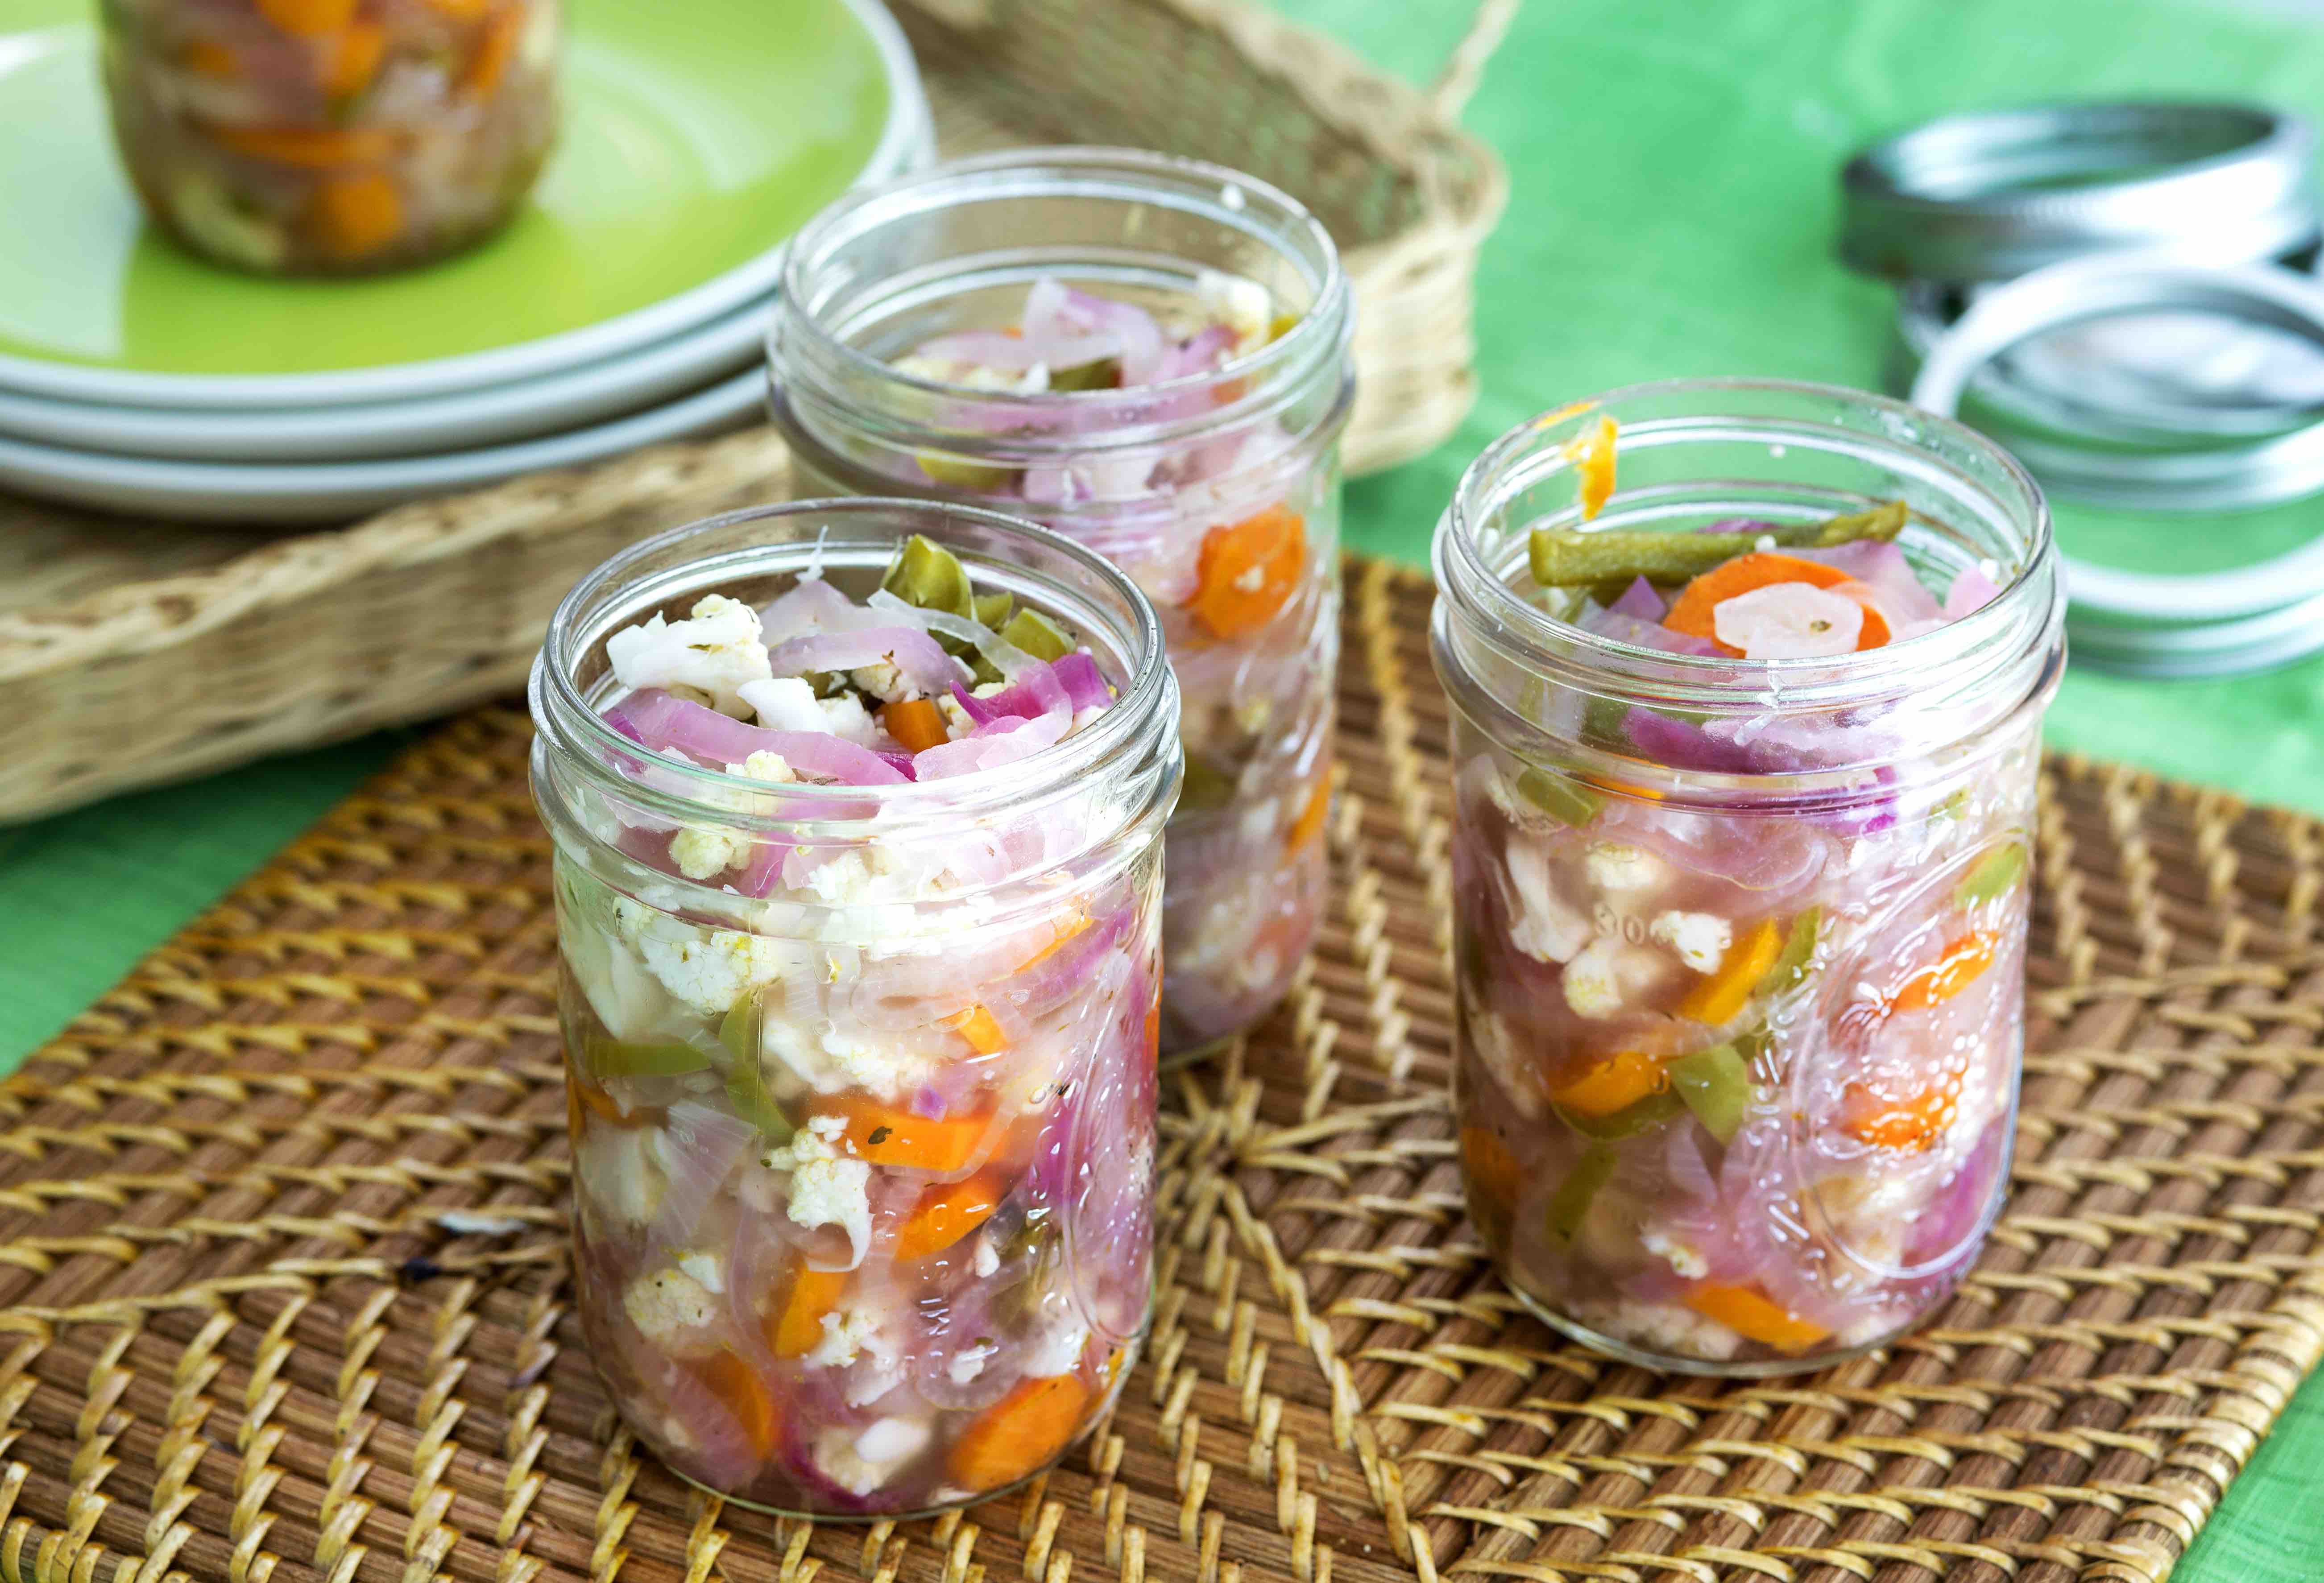 Marukan Taqueria-Style Pickled Vegetables